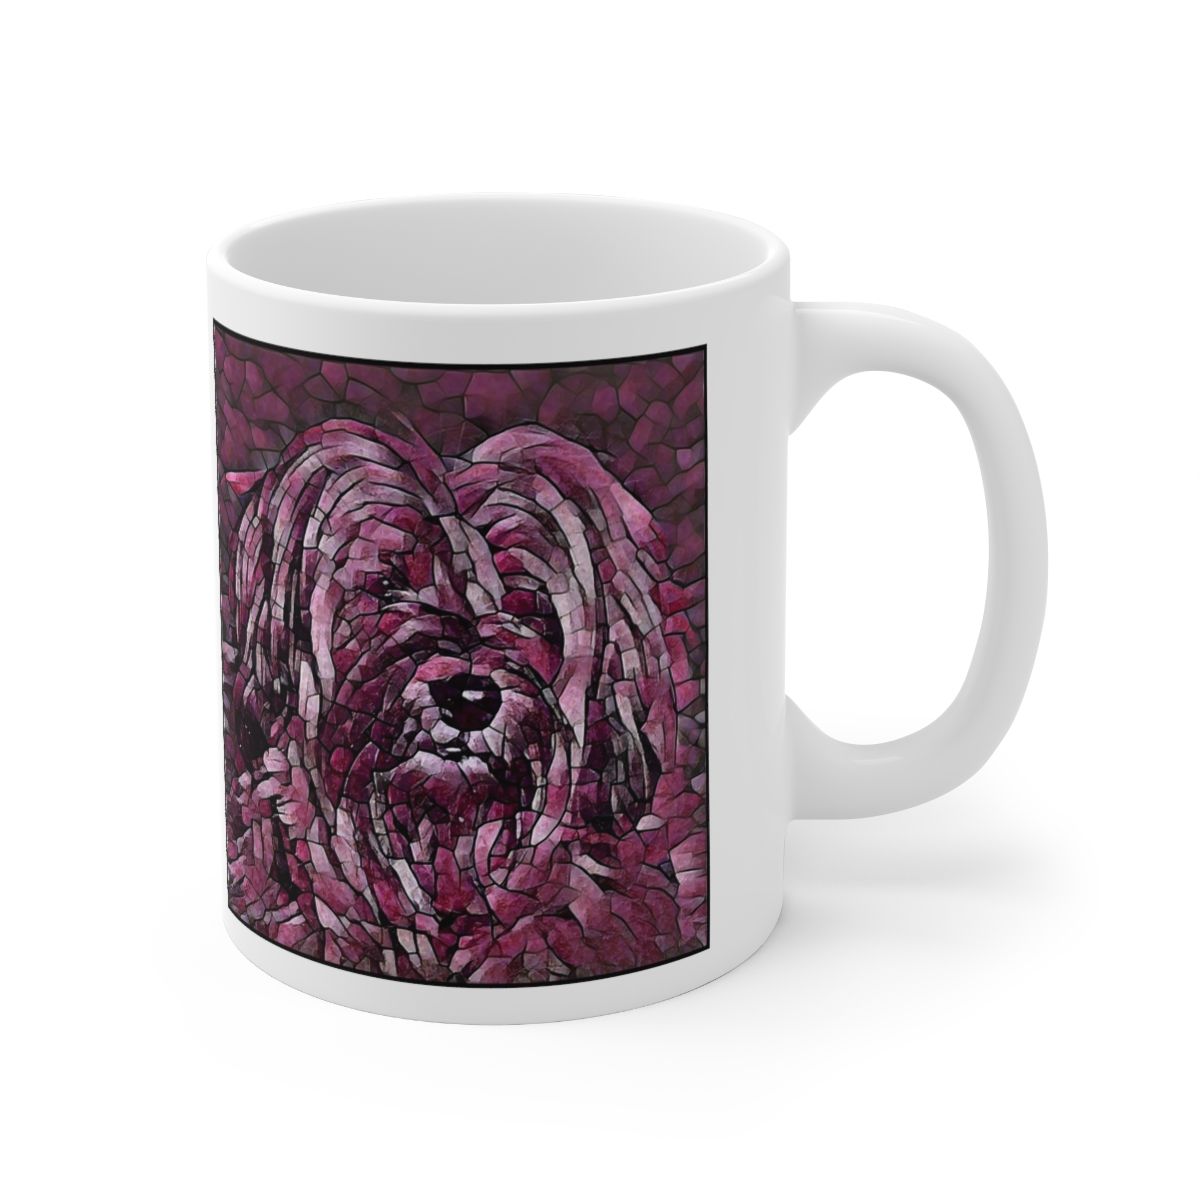 Picture of Tibetan Terrier-Plump Wine Mug